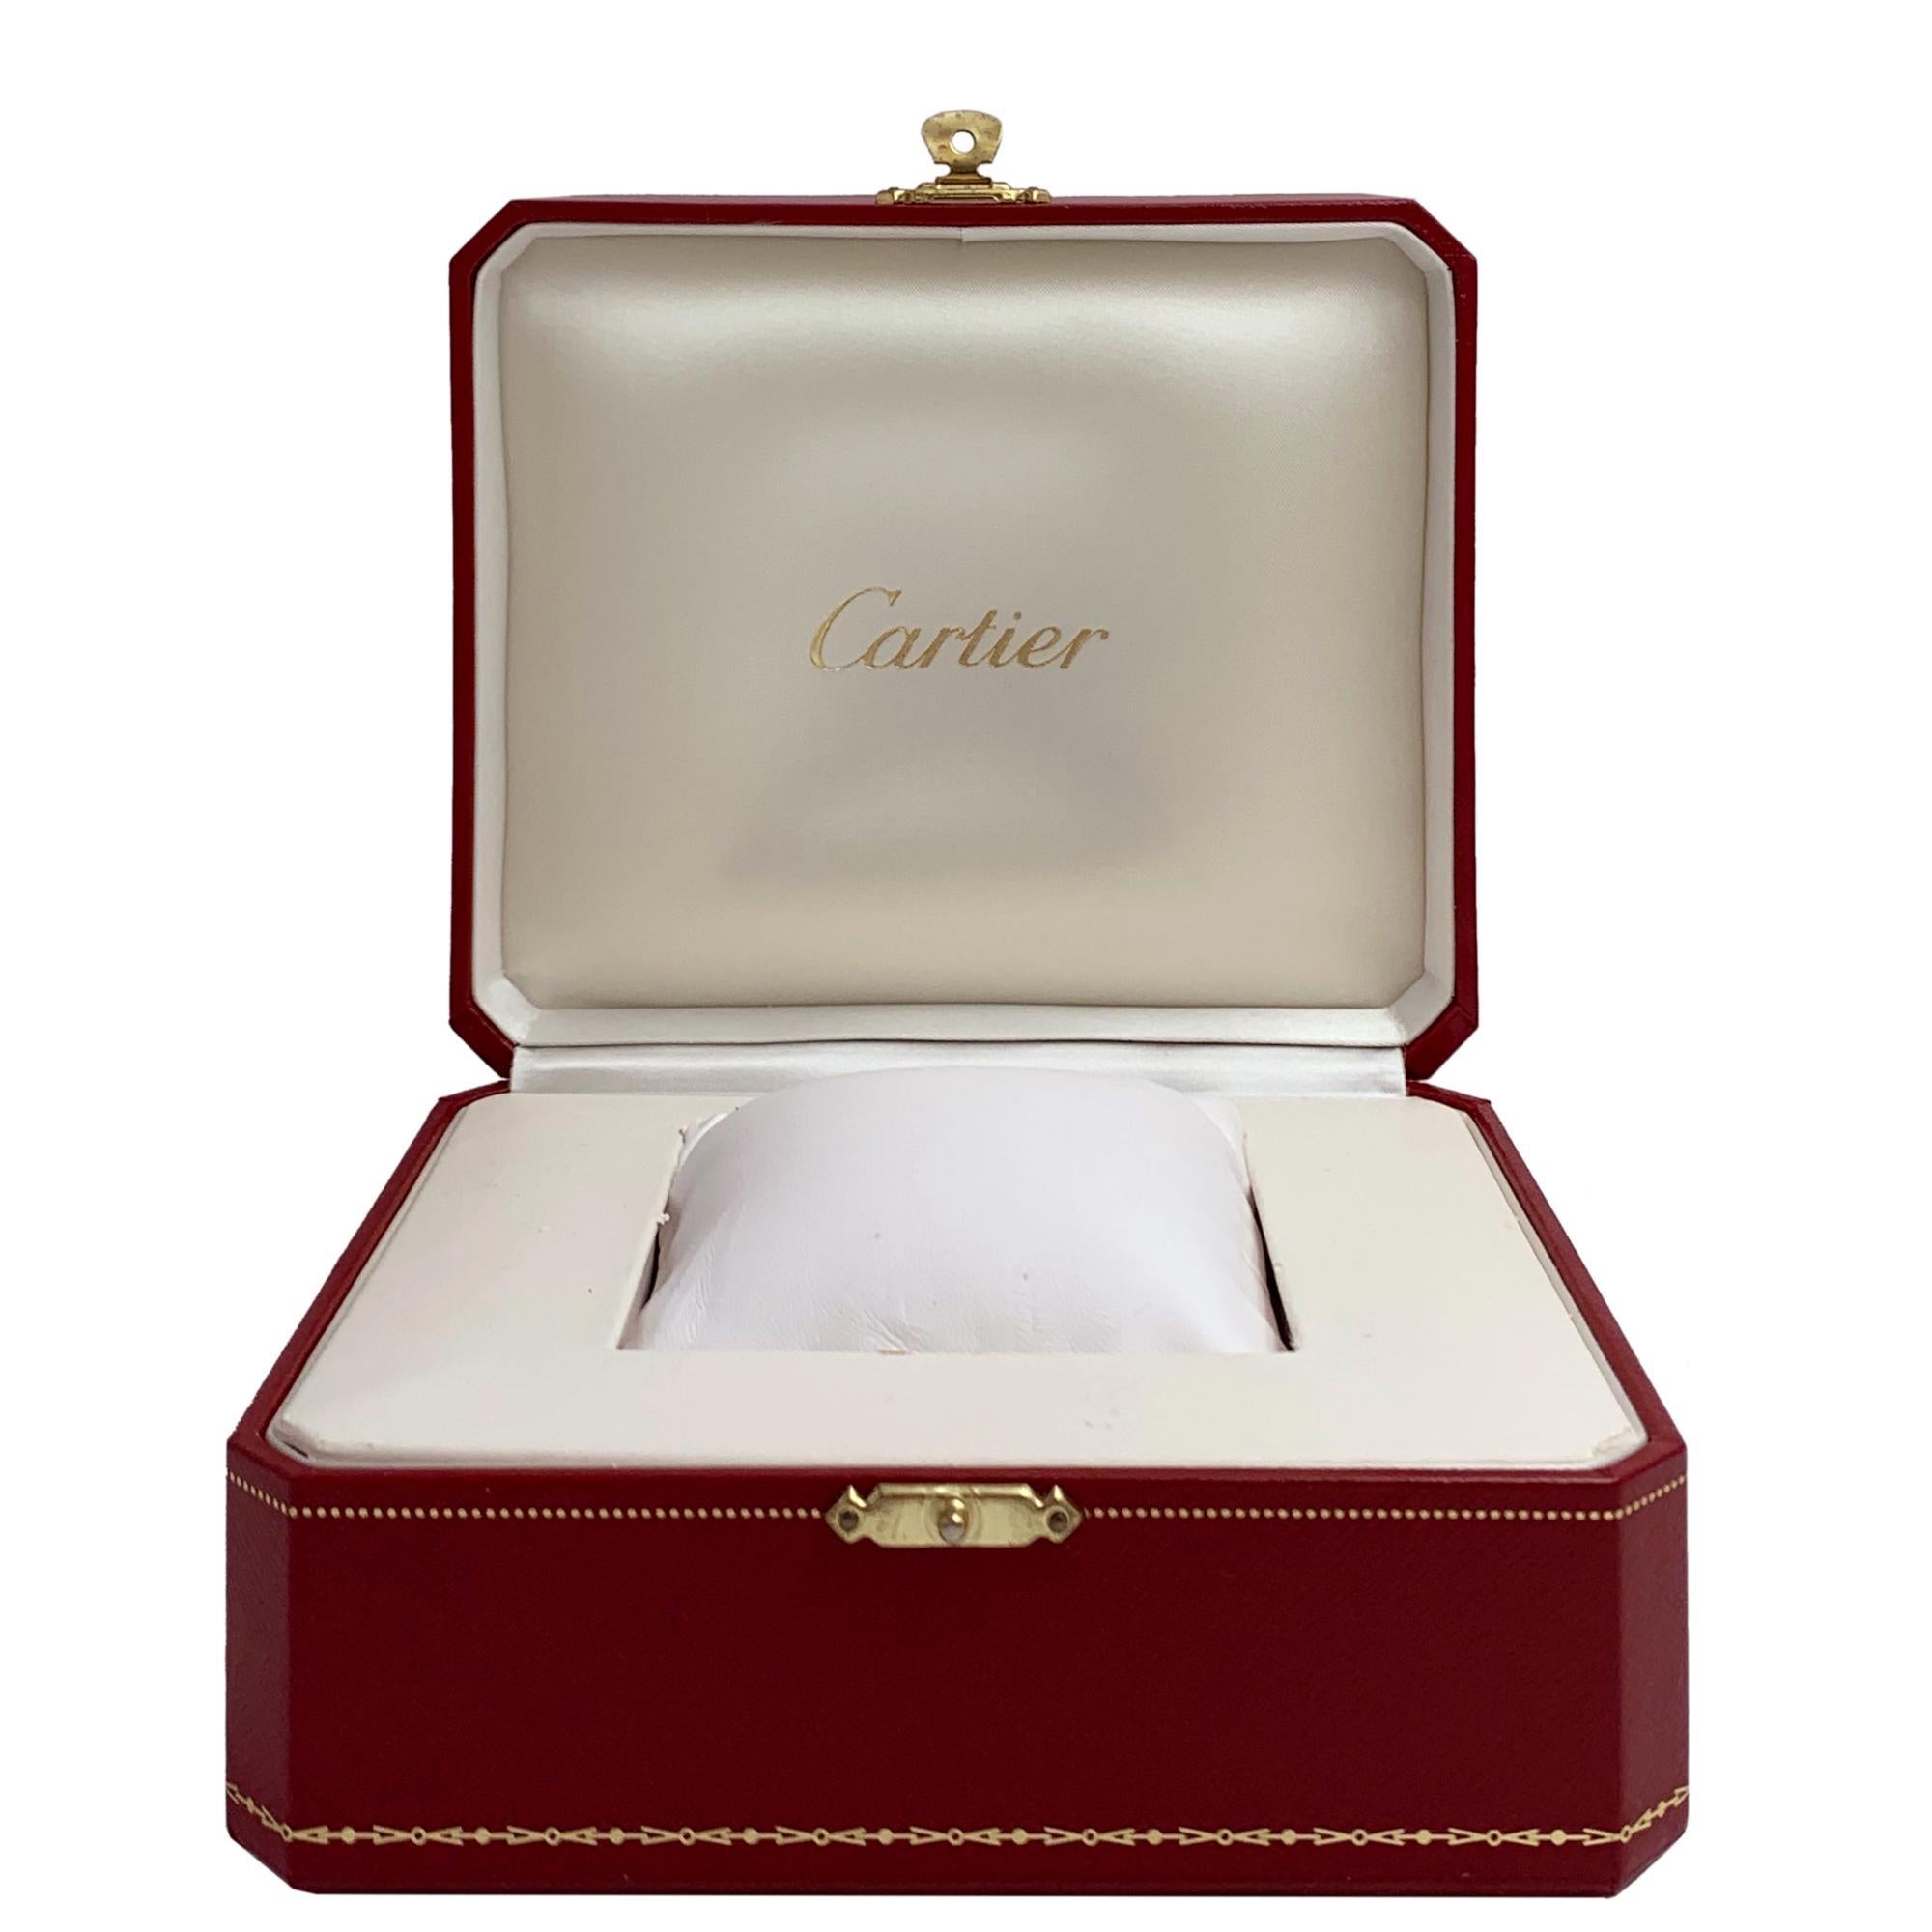 Cartier Ballon Bleu 44mm 18K Rose Gold Silver Dial Automatic Mens Watch W6920063 1